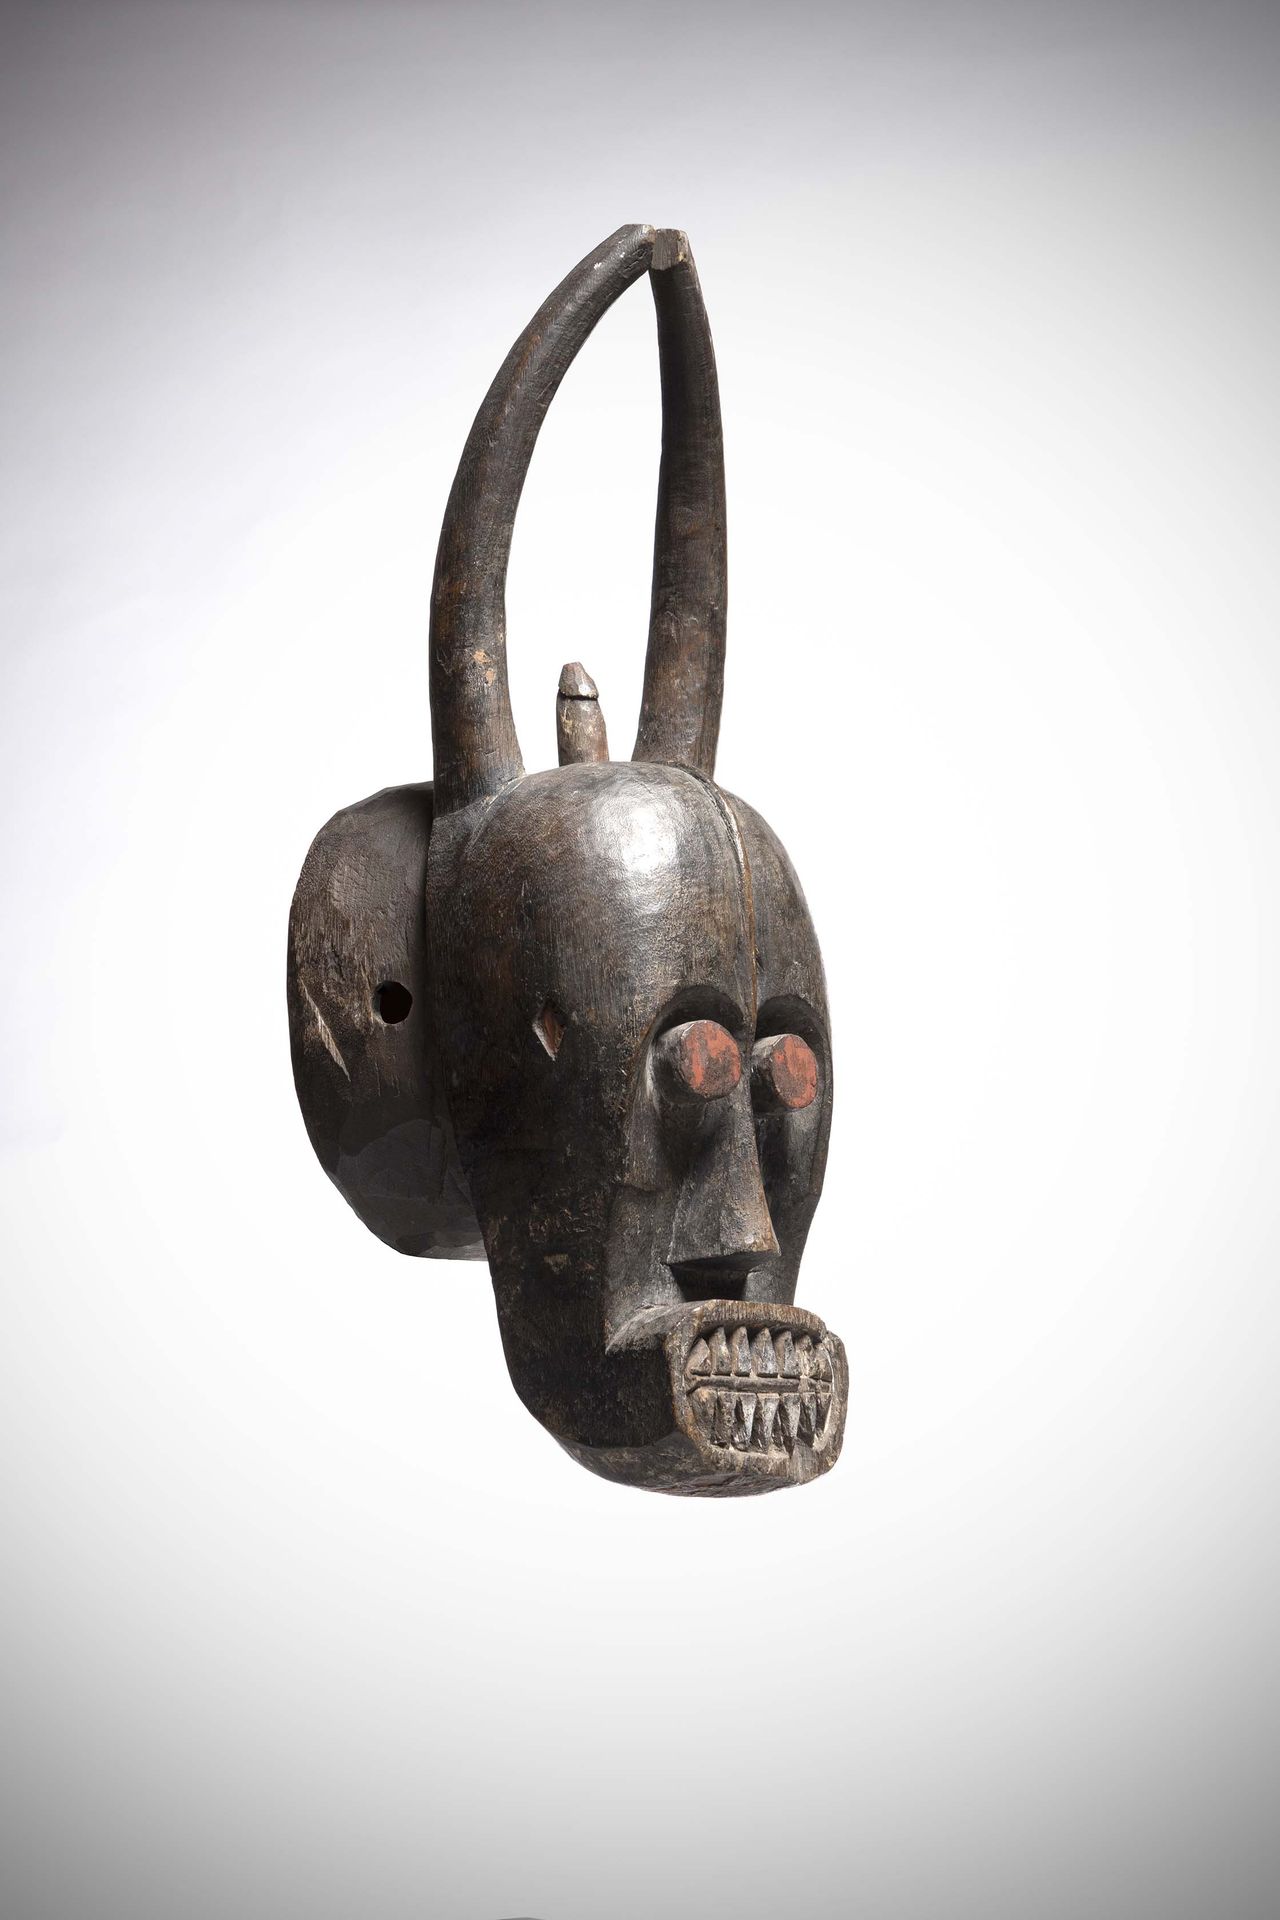 Null ijo

(Nigeria) Anthropo-zoomorphe Maske.

Die röhrenförmigen, mit rotem Ock&hellip;